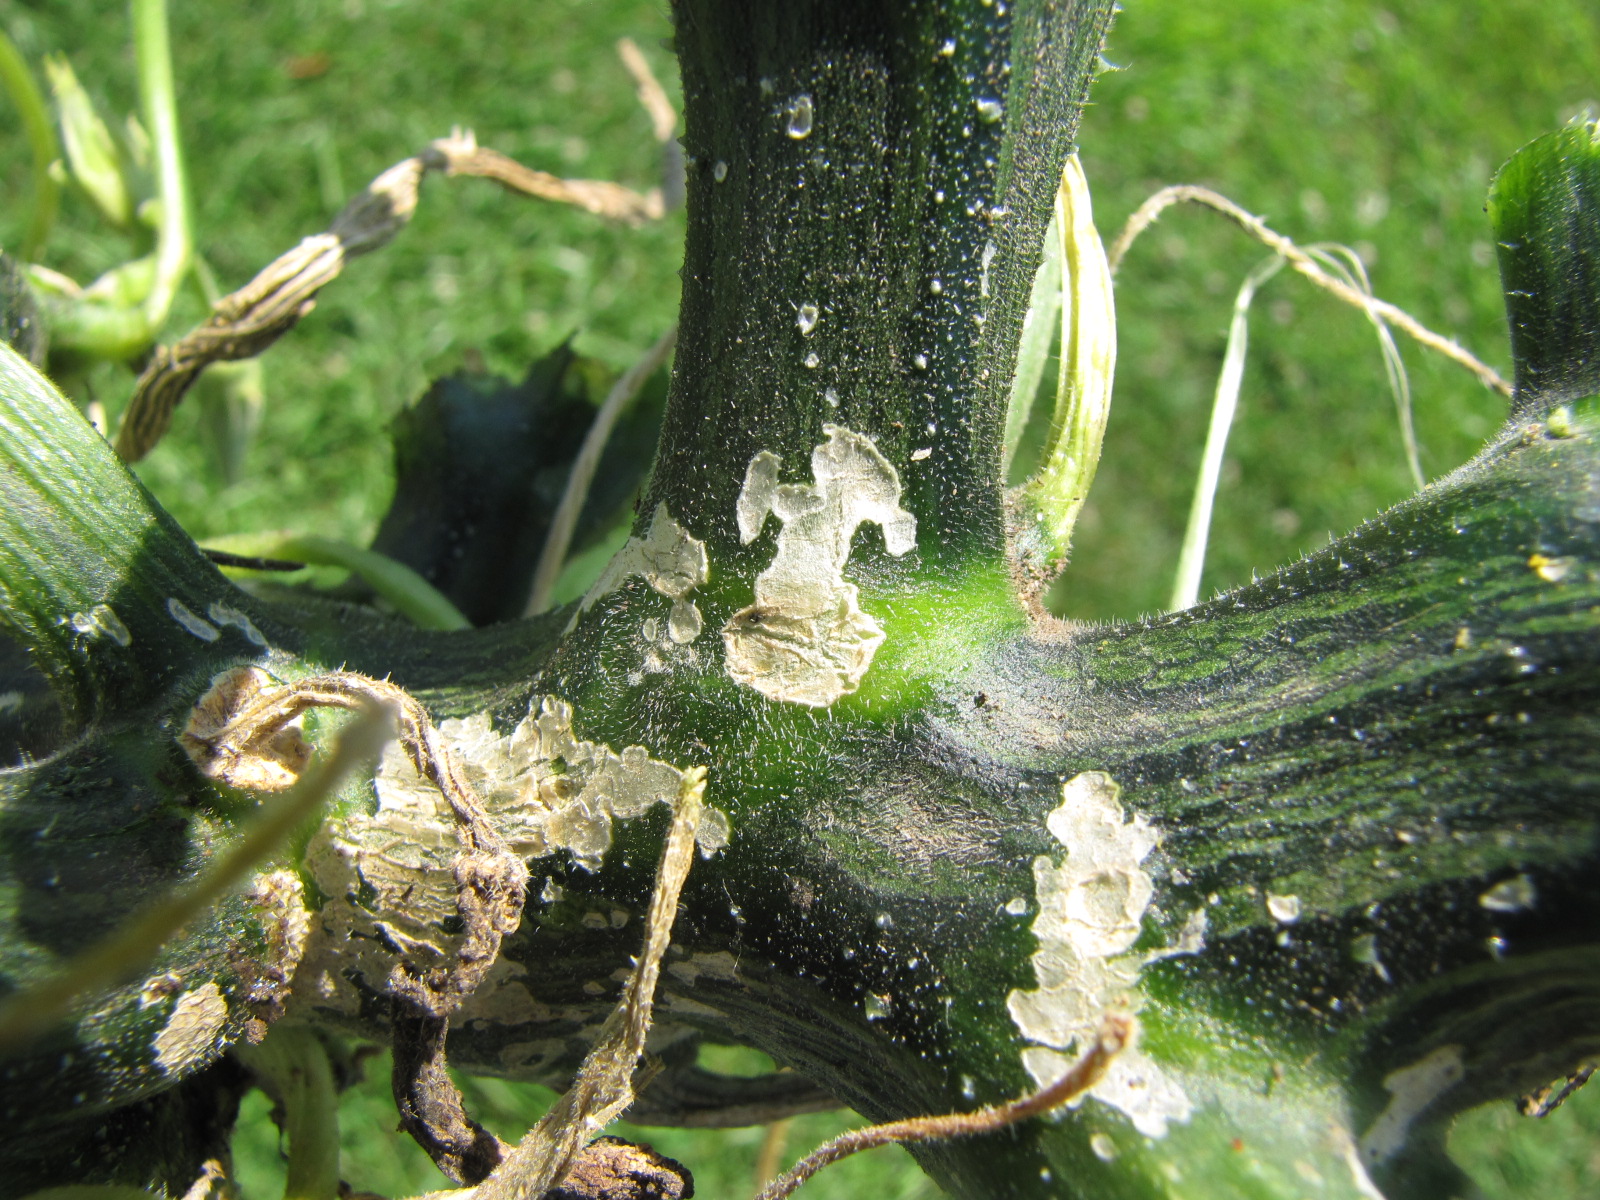 Figure 2. Cucumber beetle feeding on squash. Cucumber beetle feeding is associated with bacterial wilt.